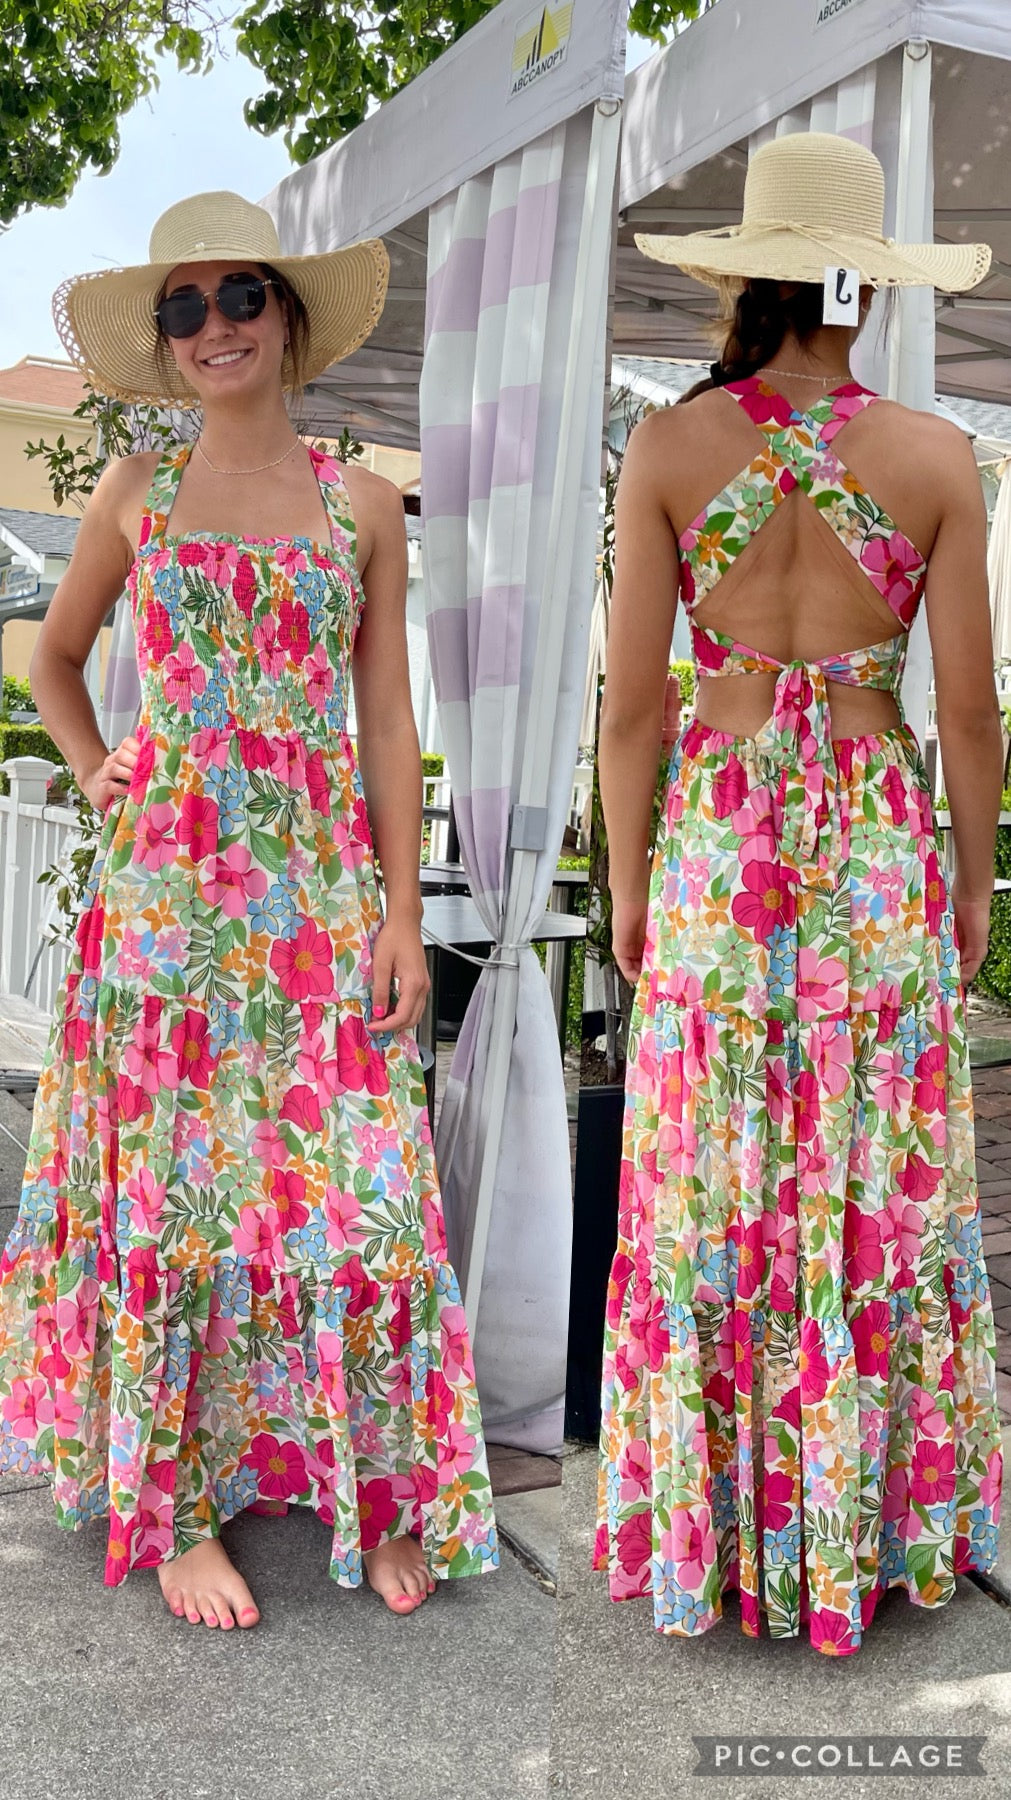 The Floral Maxi Dress